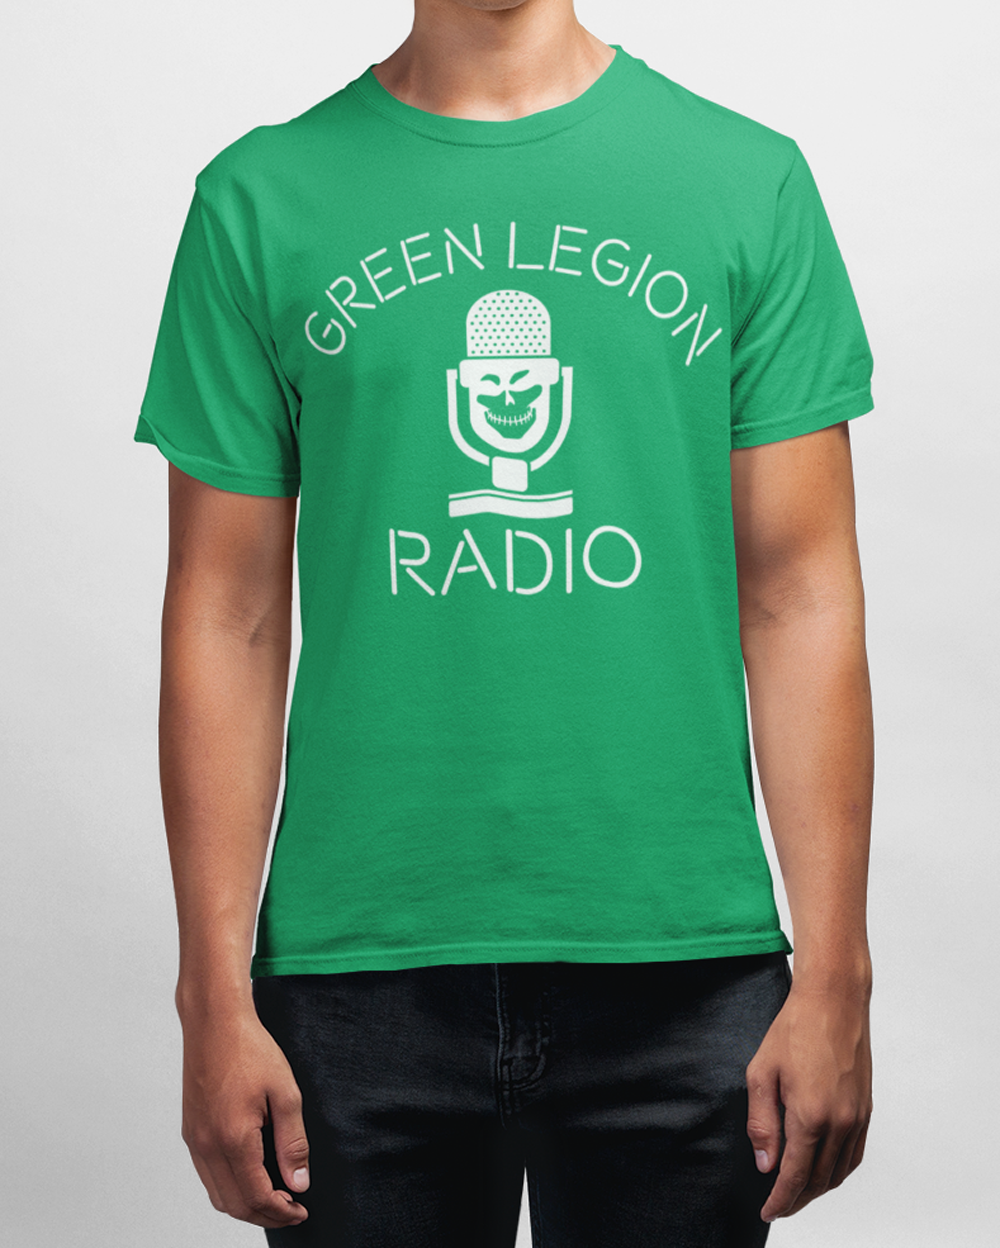 Green Legion Radio Retro Kelly Green T-Shirt